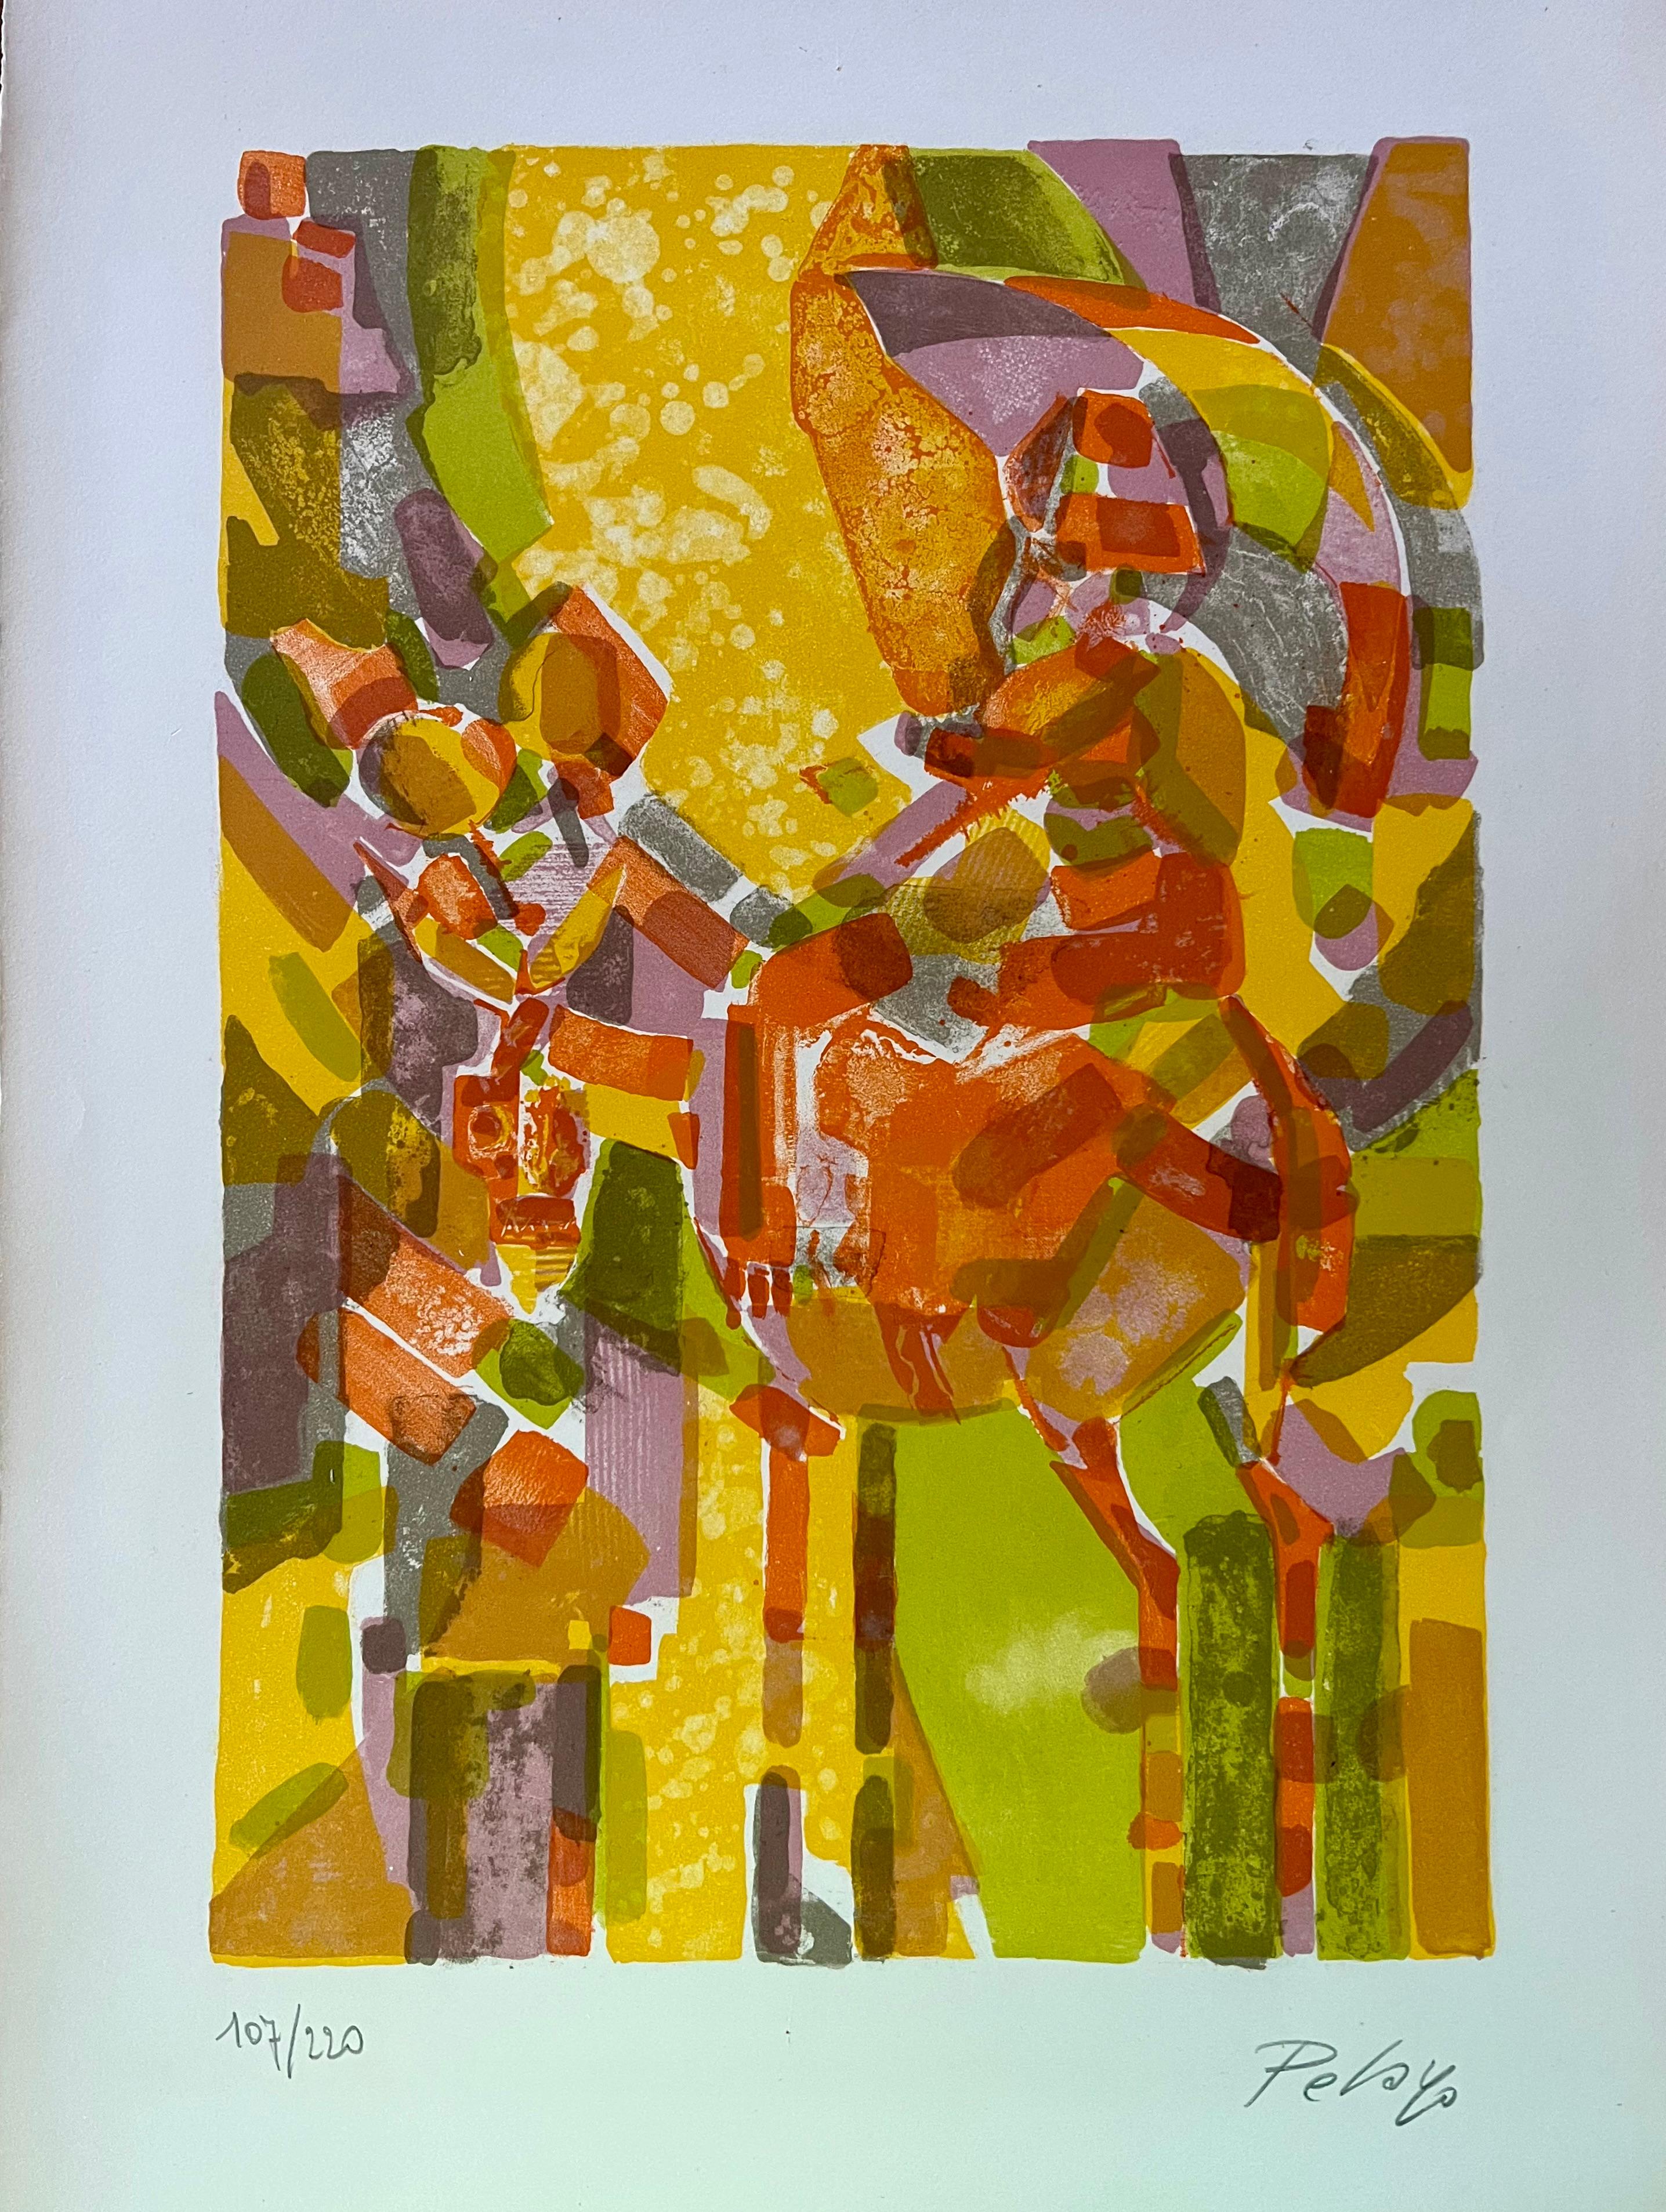 Jose Maria Pelayo Abstract Print - untitled, color abstract, original lithograph